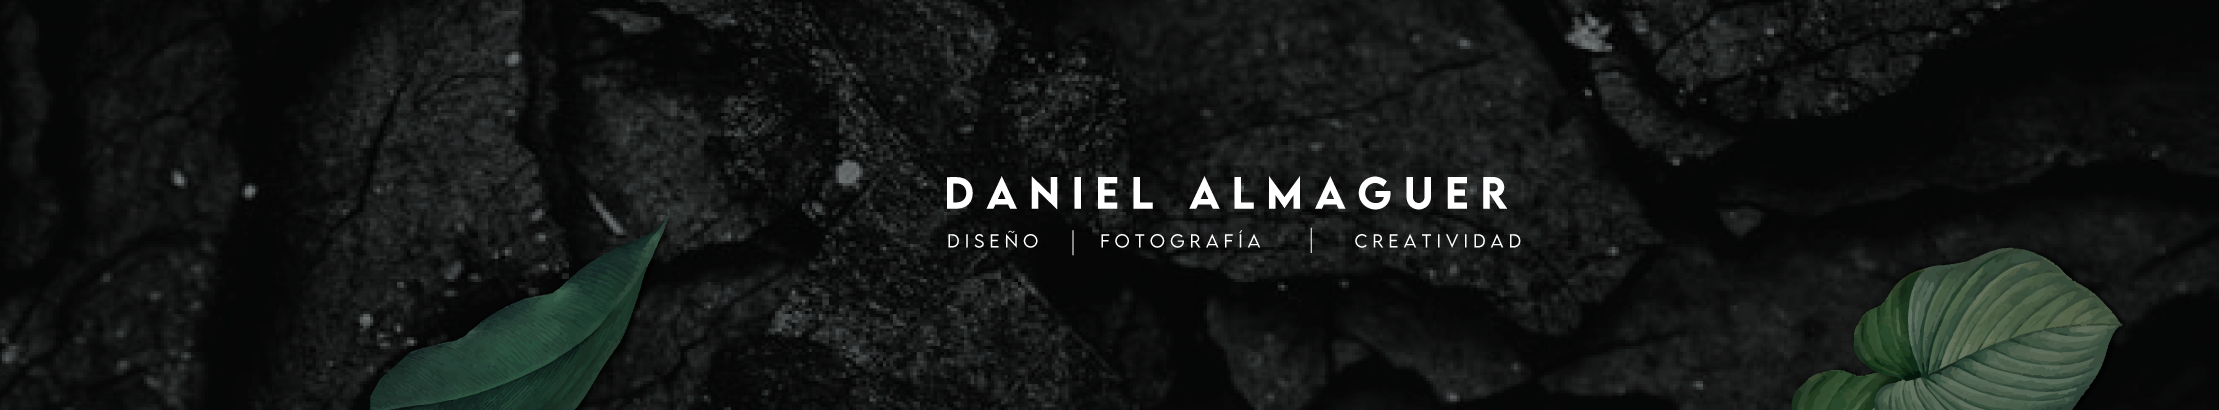 Daniel Almaguer's profile banner